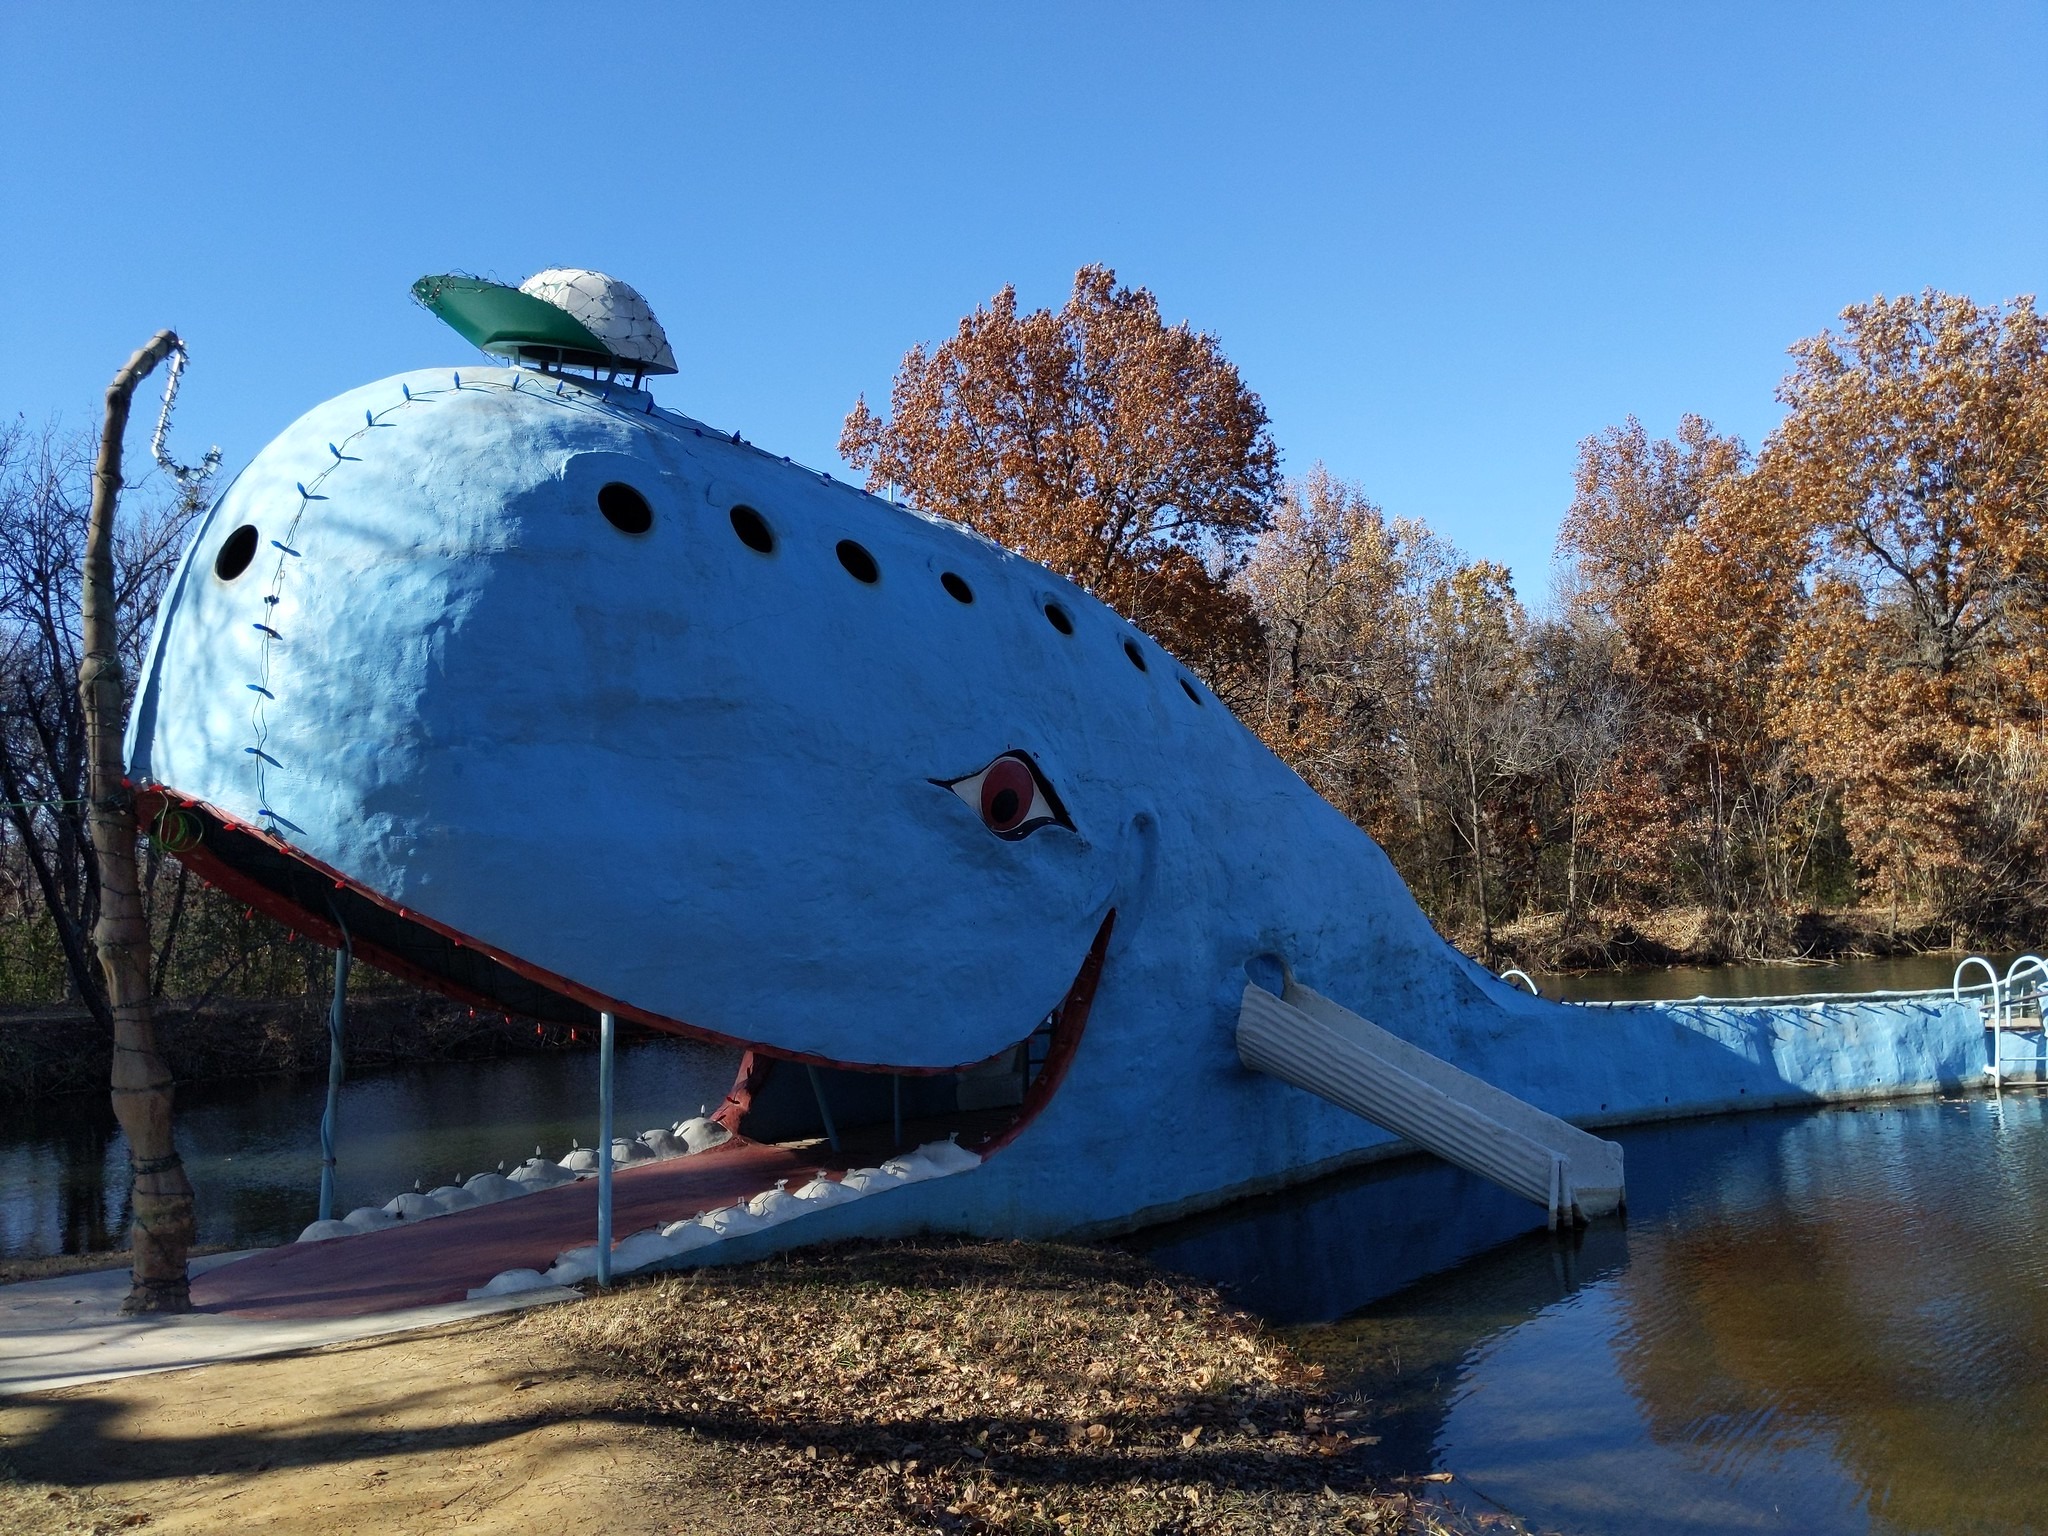 The Blue Whale of Catoosa Oklahoma